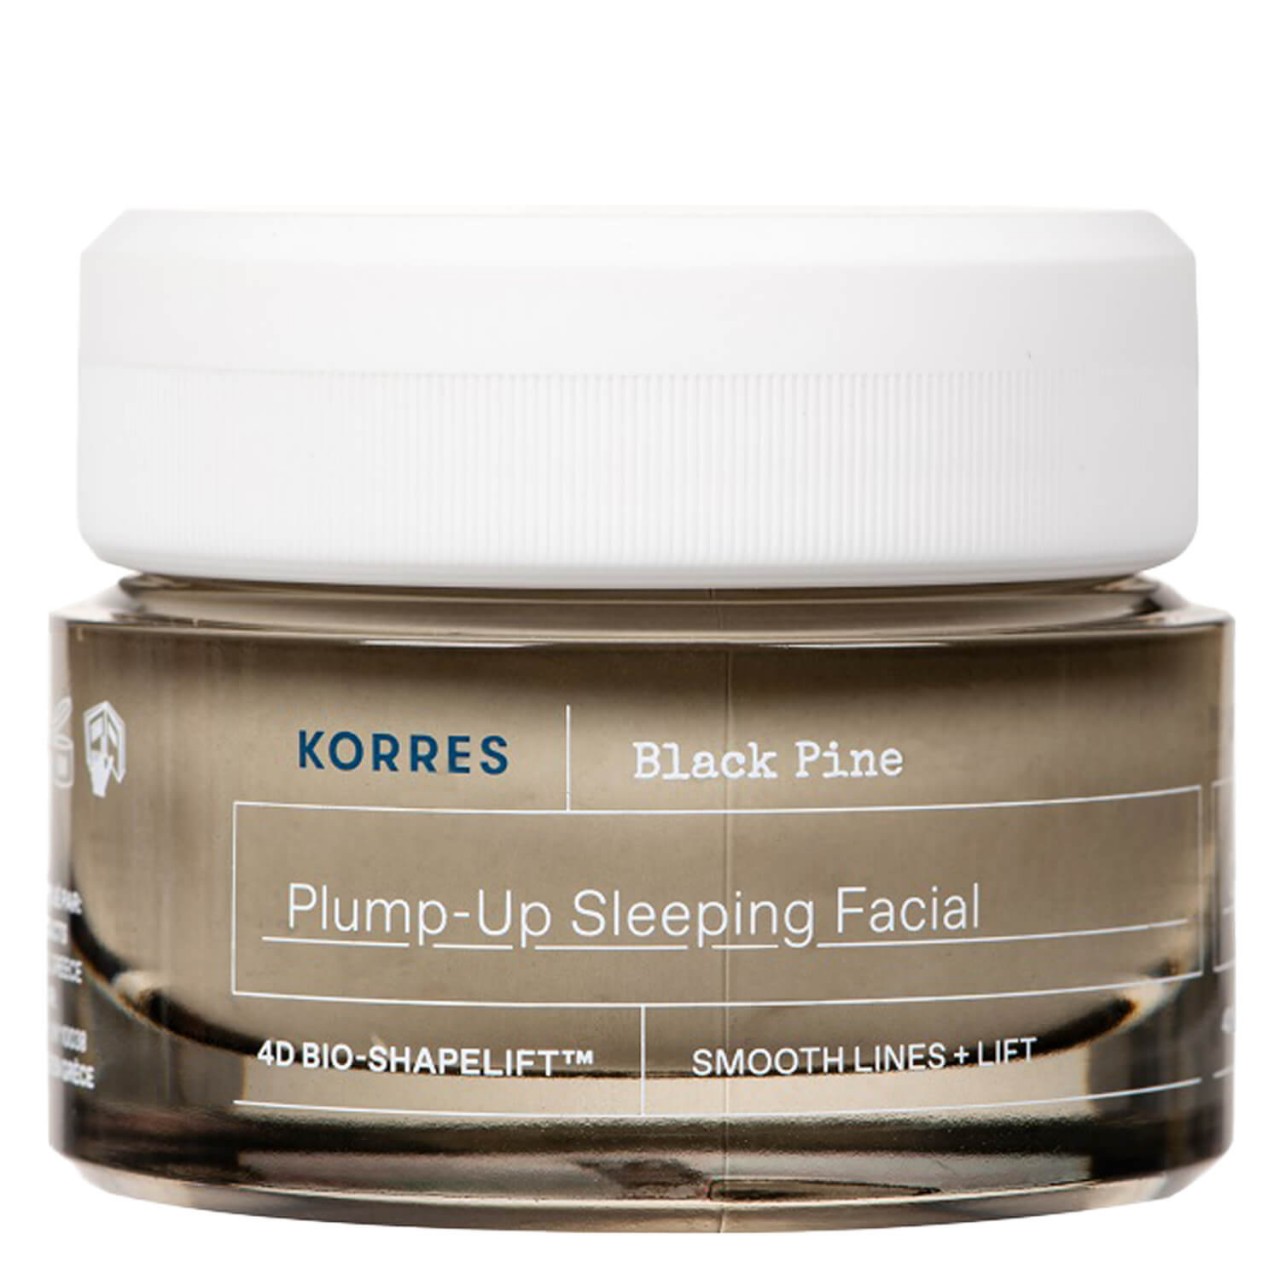 Korres Care - Black Pine 4D BioShapeLift Plump-Up Sleeping Facial von Korres